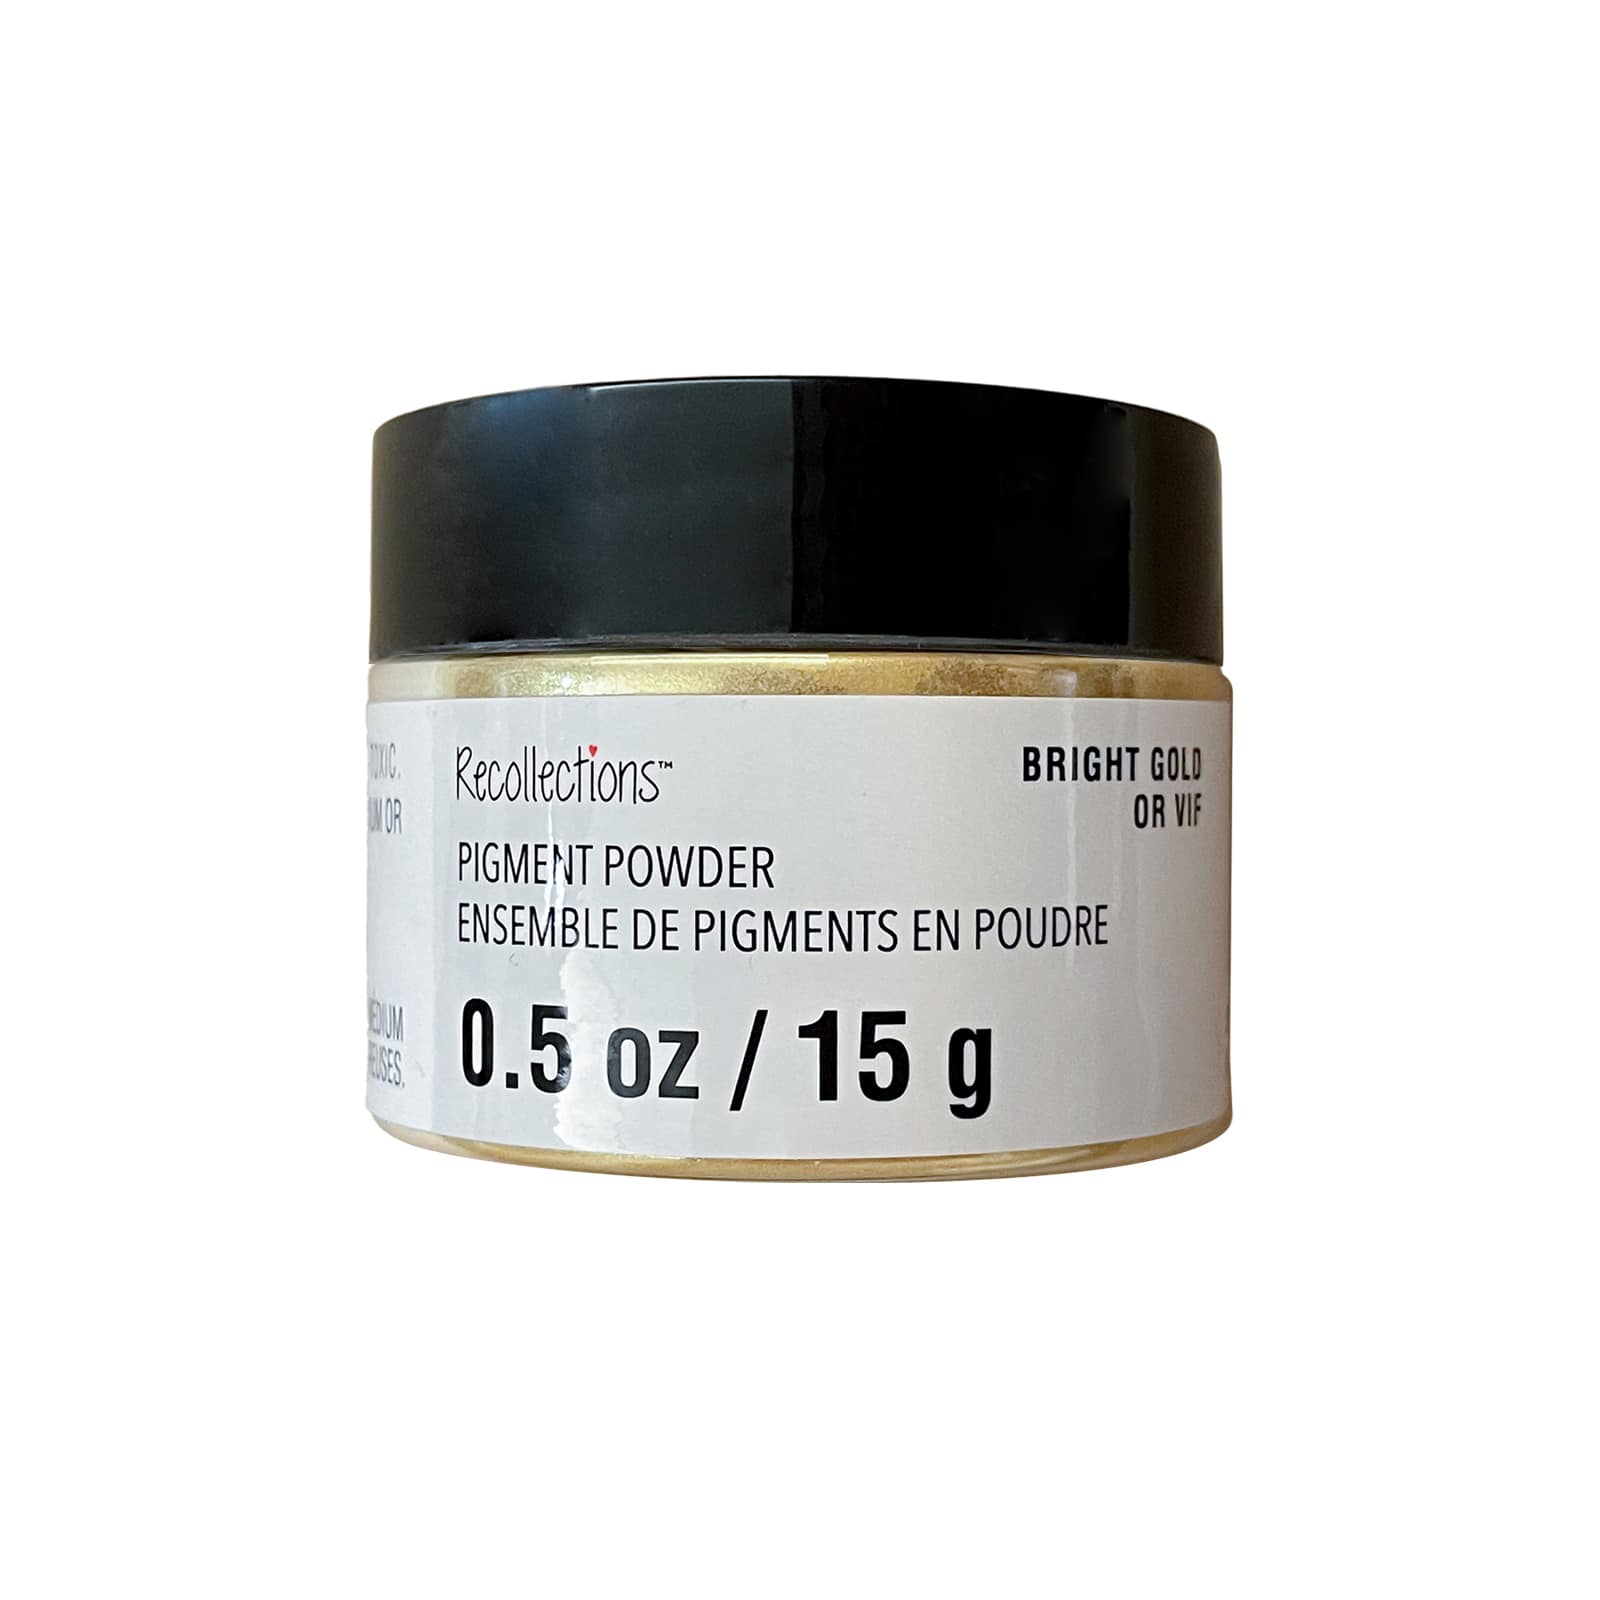 Luster White Mica Pearl Powder 3.5oz Cosmetic Grade Resin Soap Slime Makeup  Art